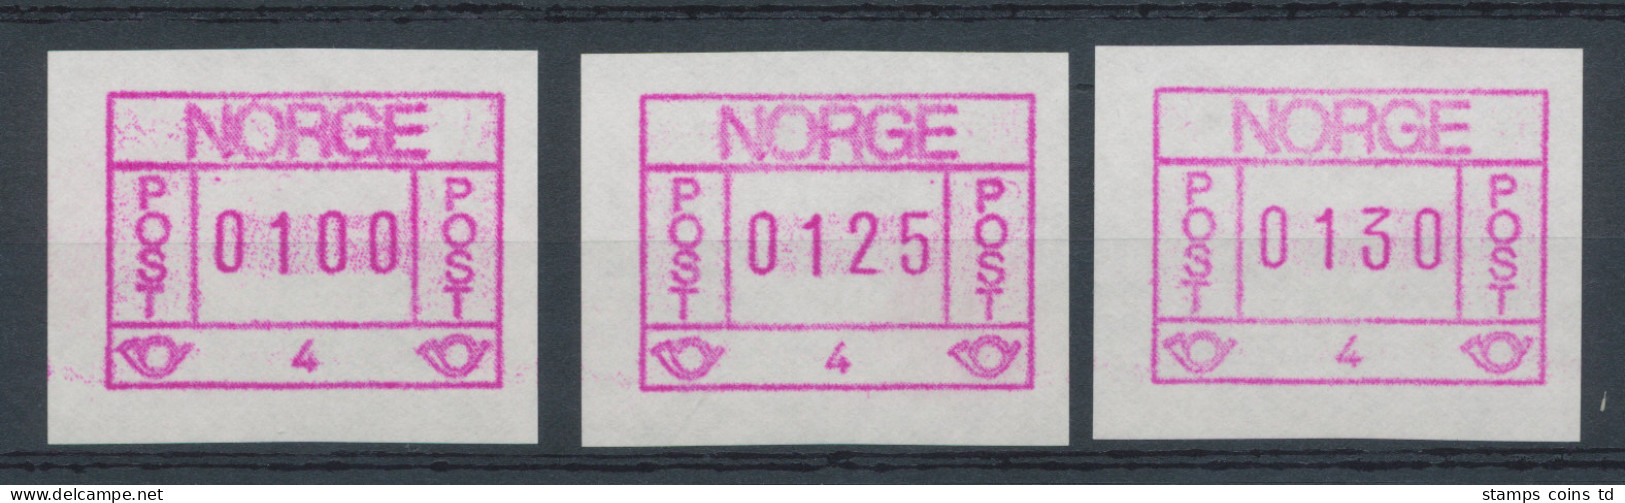 Norwegen Frama-ATM 1978, Aut.-Nr. 4 (Trondheim) Tastensatz 100-125-130 ** - Viñetas De Franqueo [ATM]